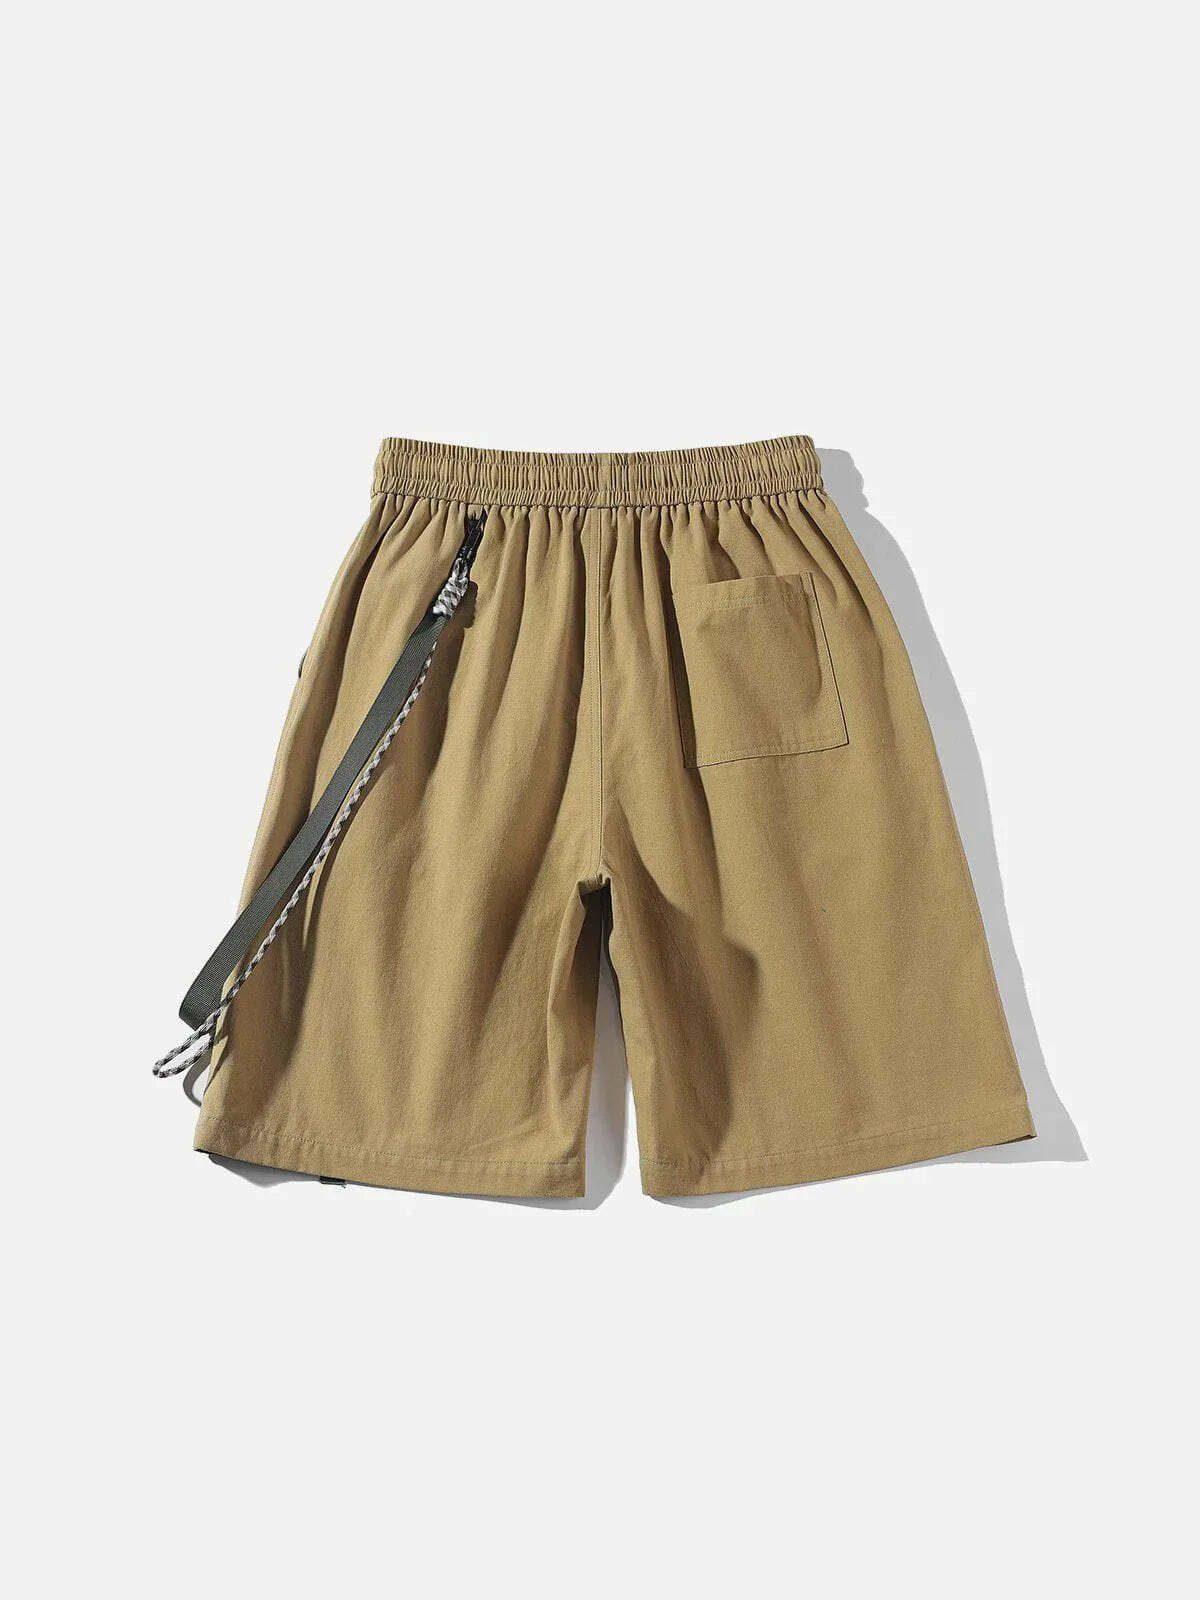 elastic waistband detachable strap shorts edgy cargo style 1481